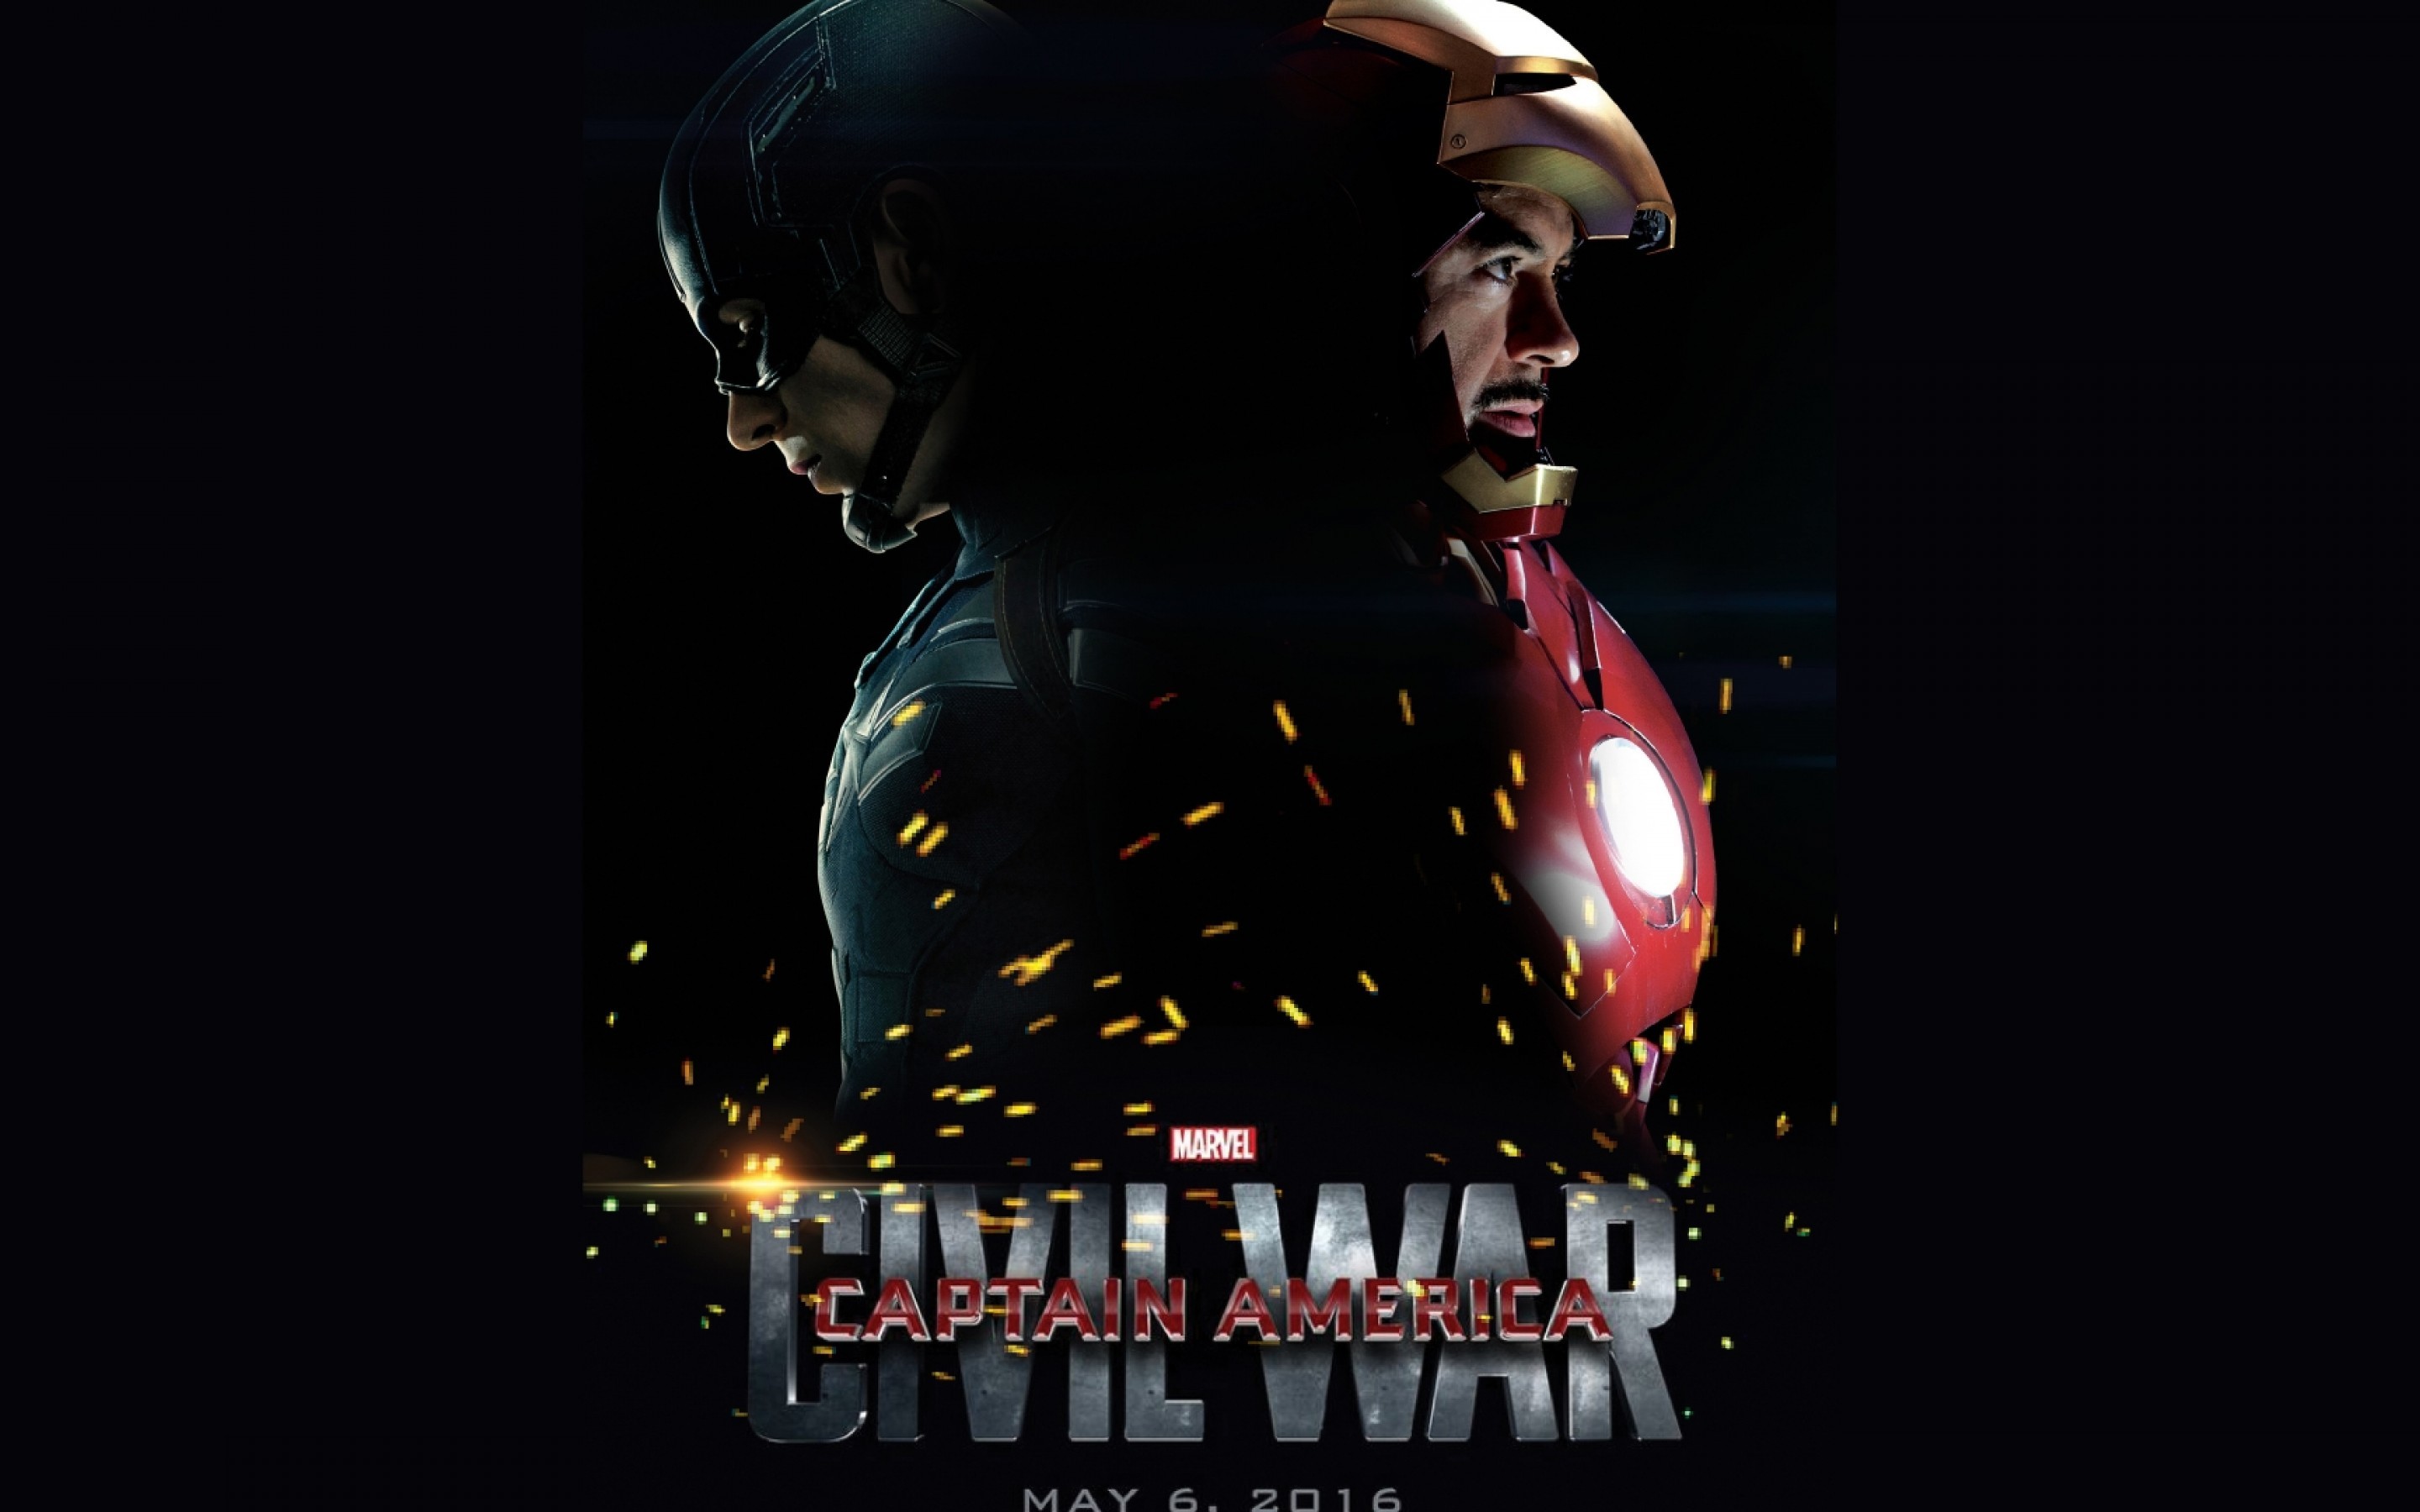 2880x1800 Captain America Civil War - 15" Retina Macbook Pro